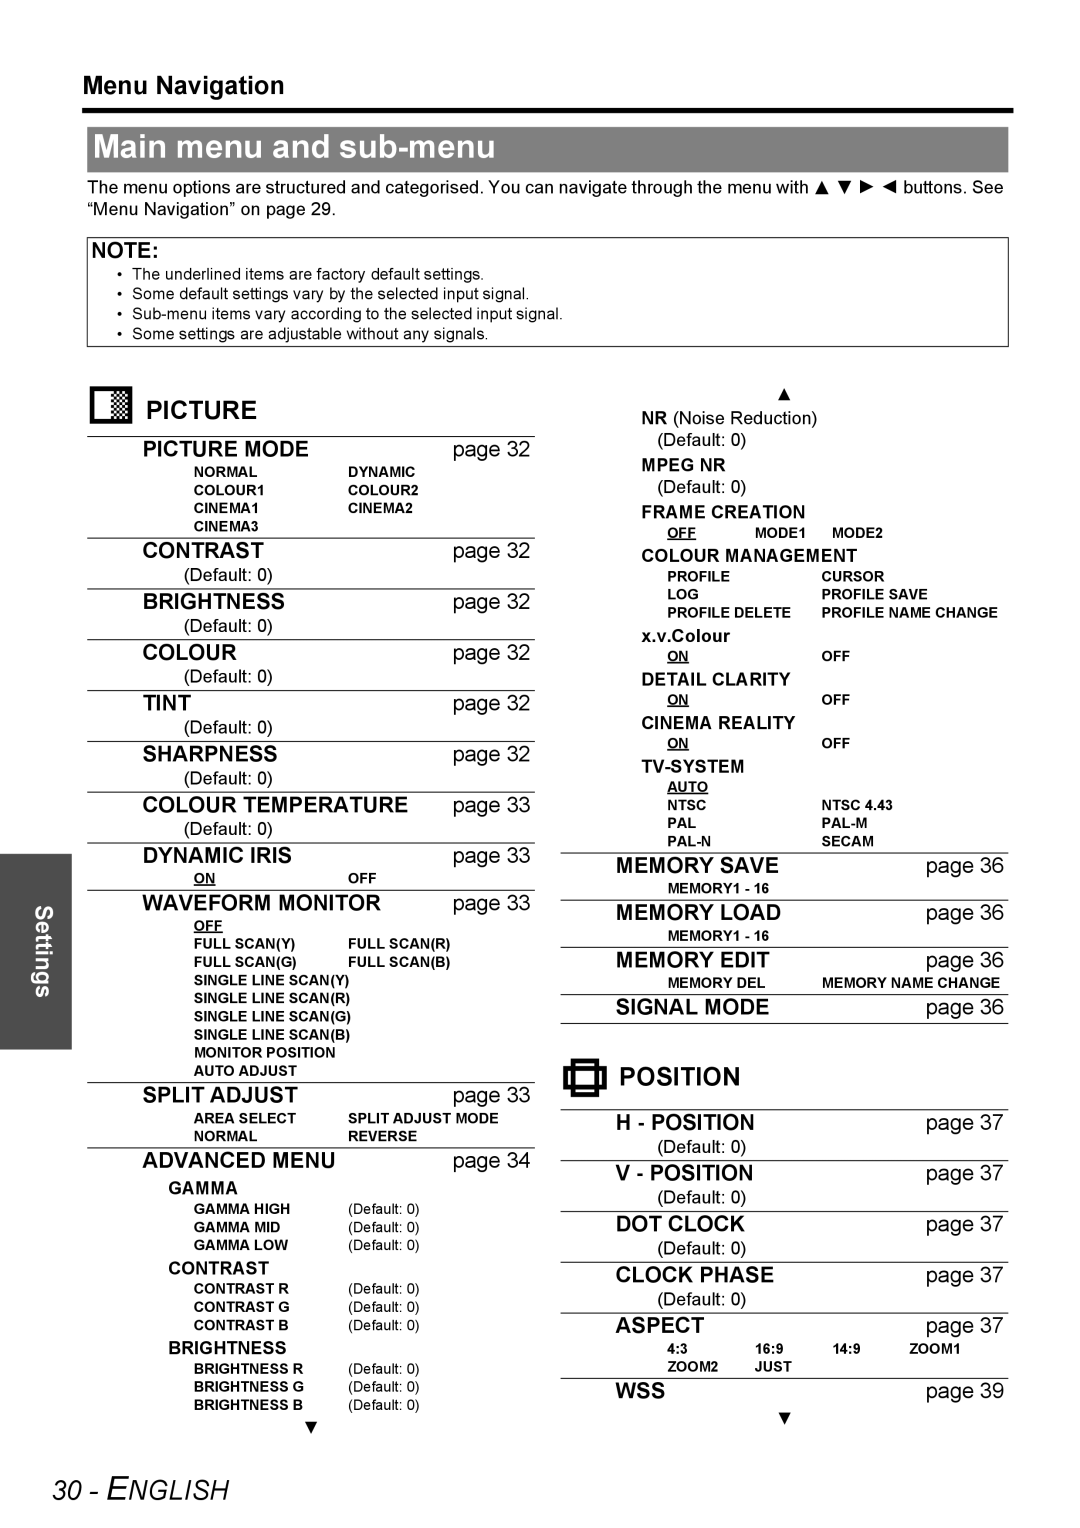 Panasonic PT-AE3000E manual Main menu and sub-menu, English, Menu Navigation, Picture, Position, Settings 